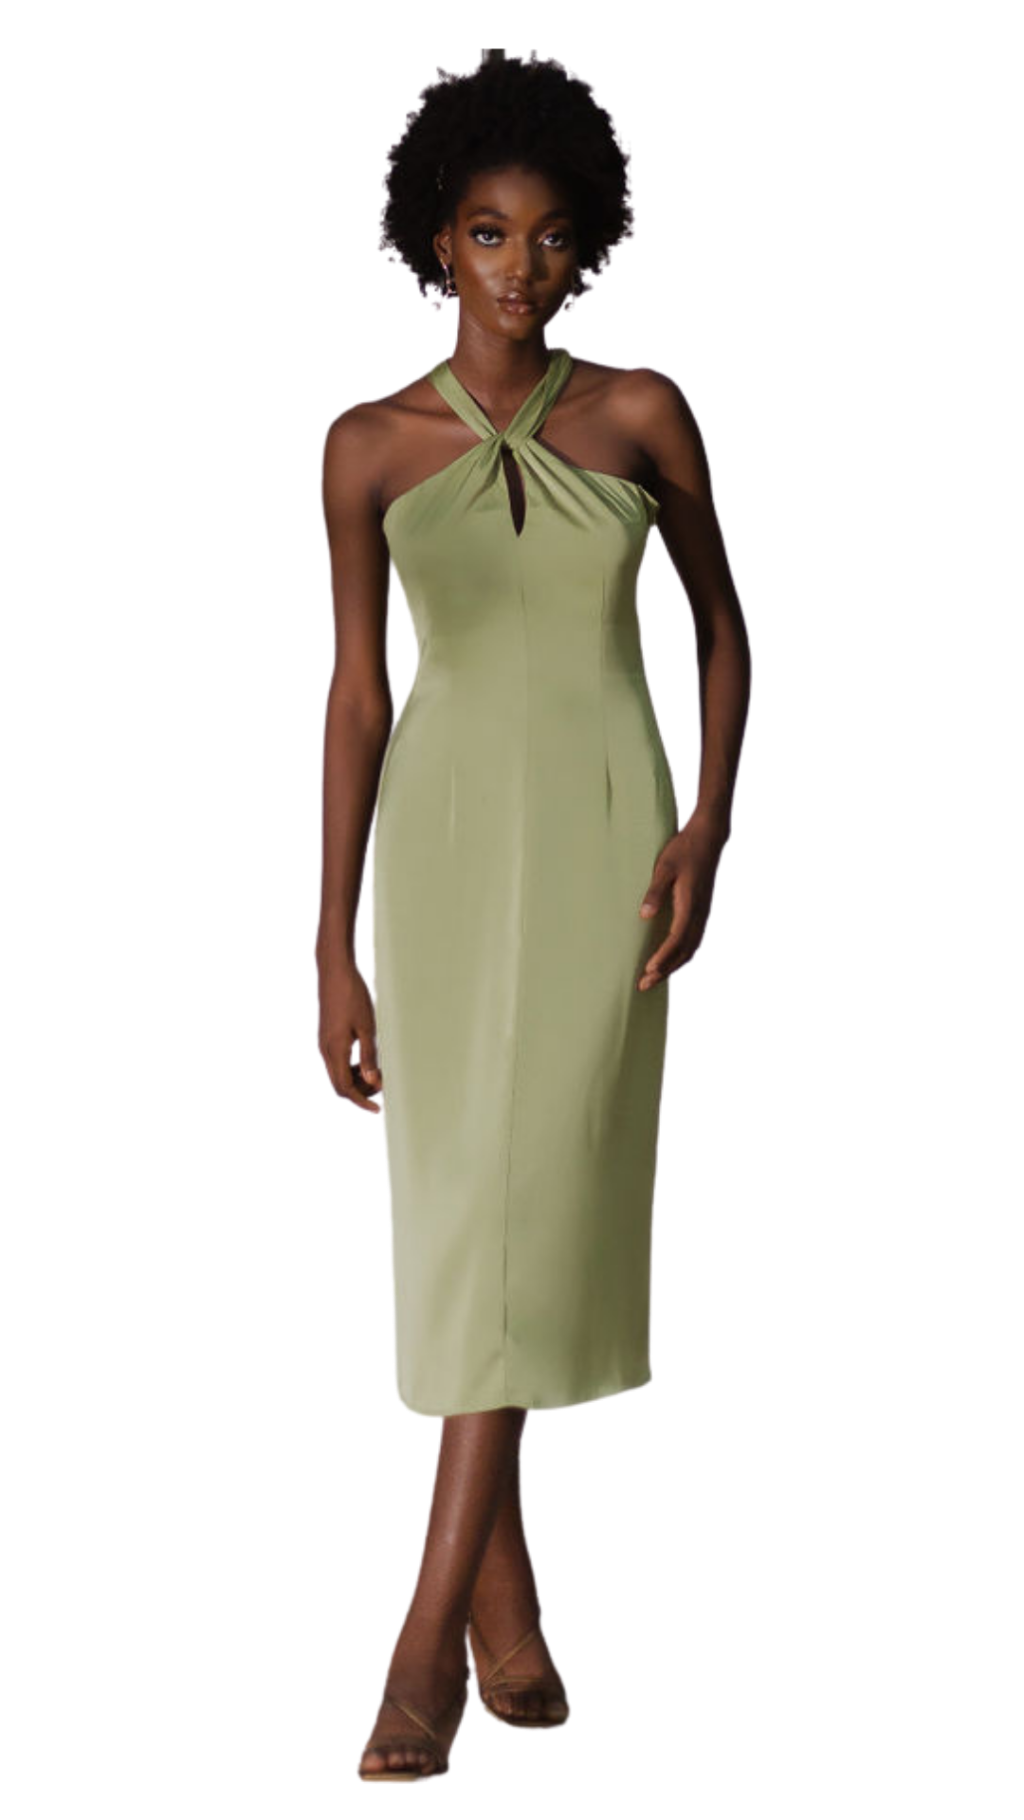 A model wearing an olive halter neck dress 